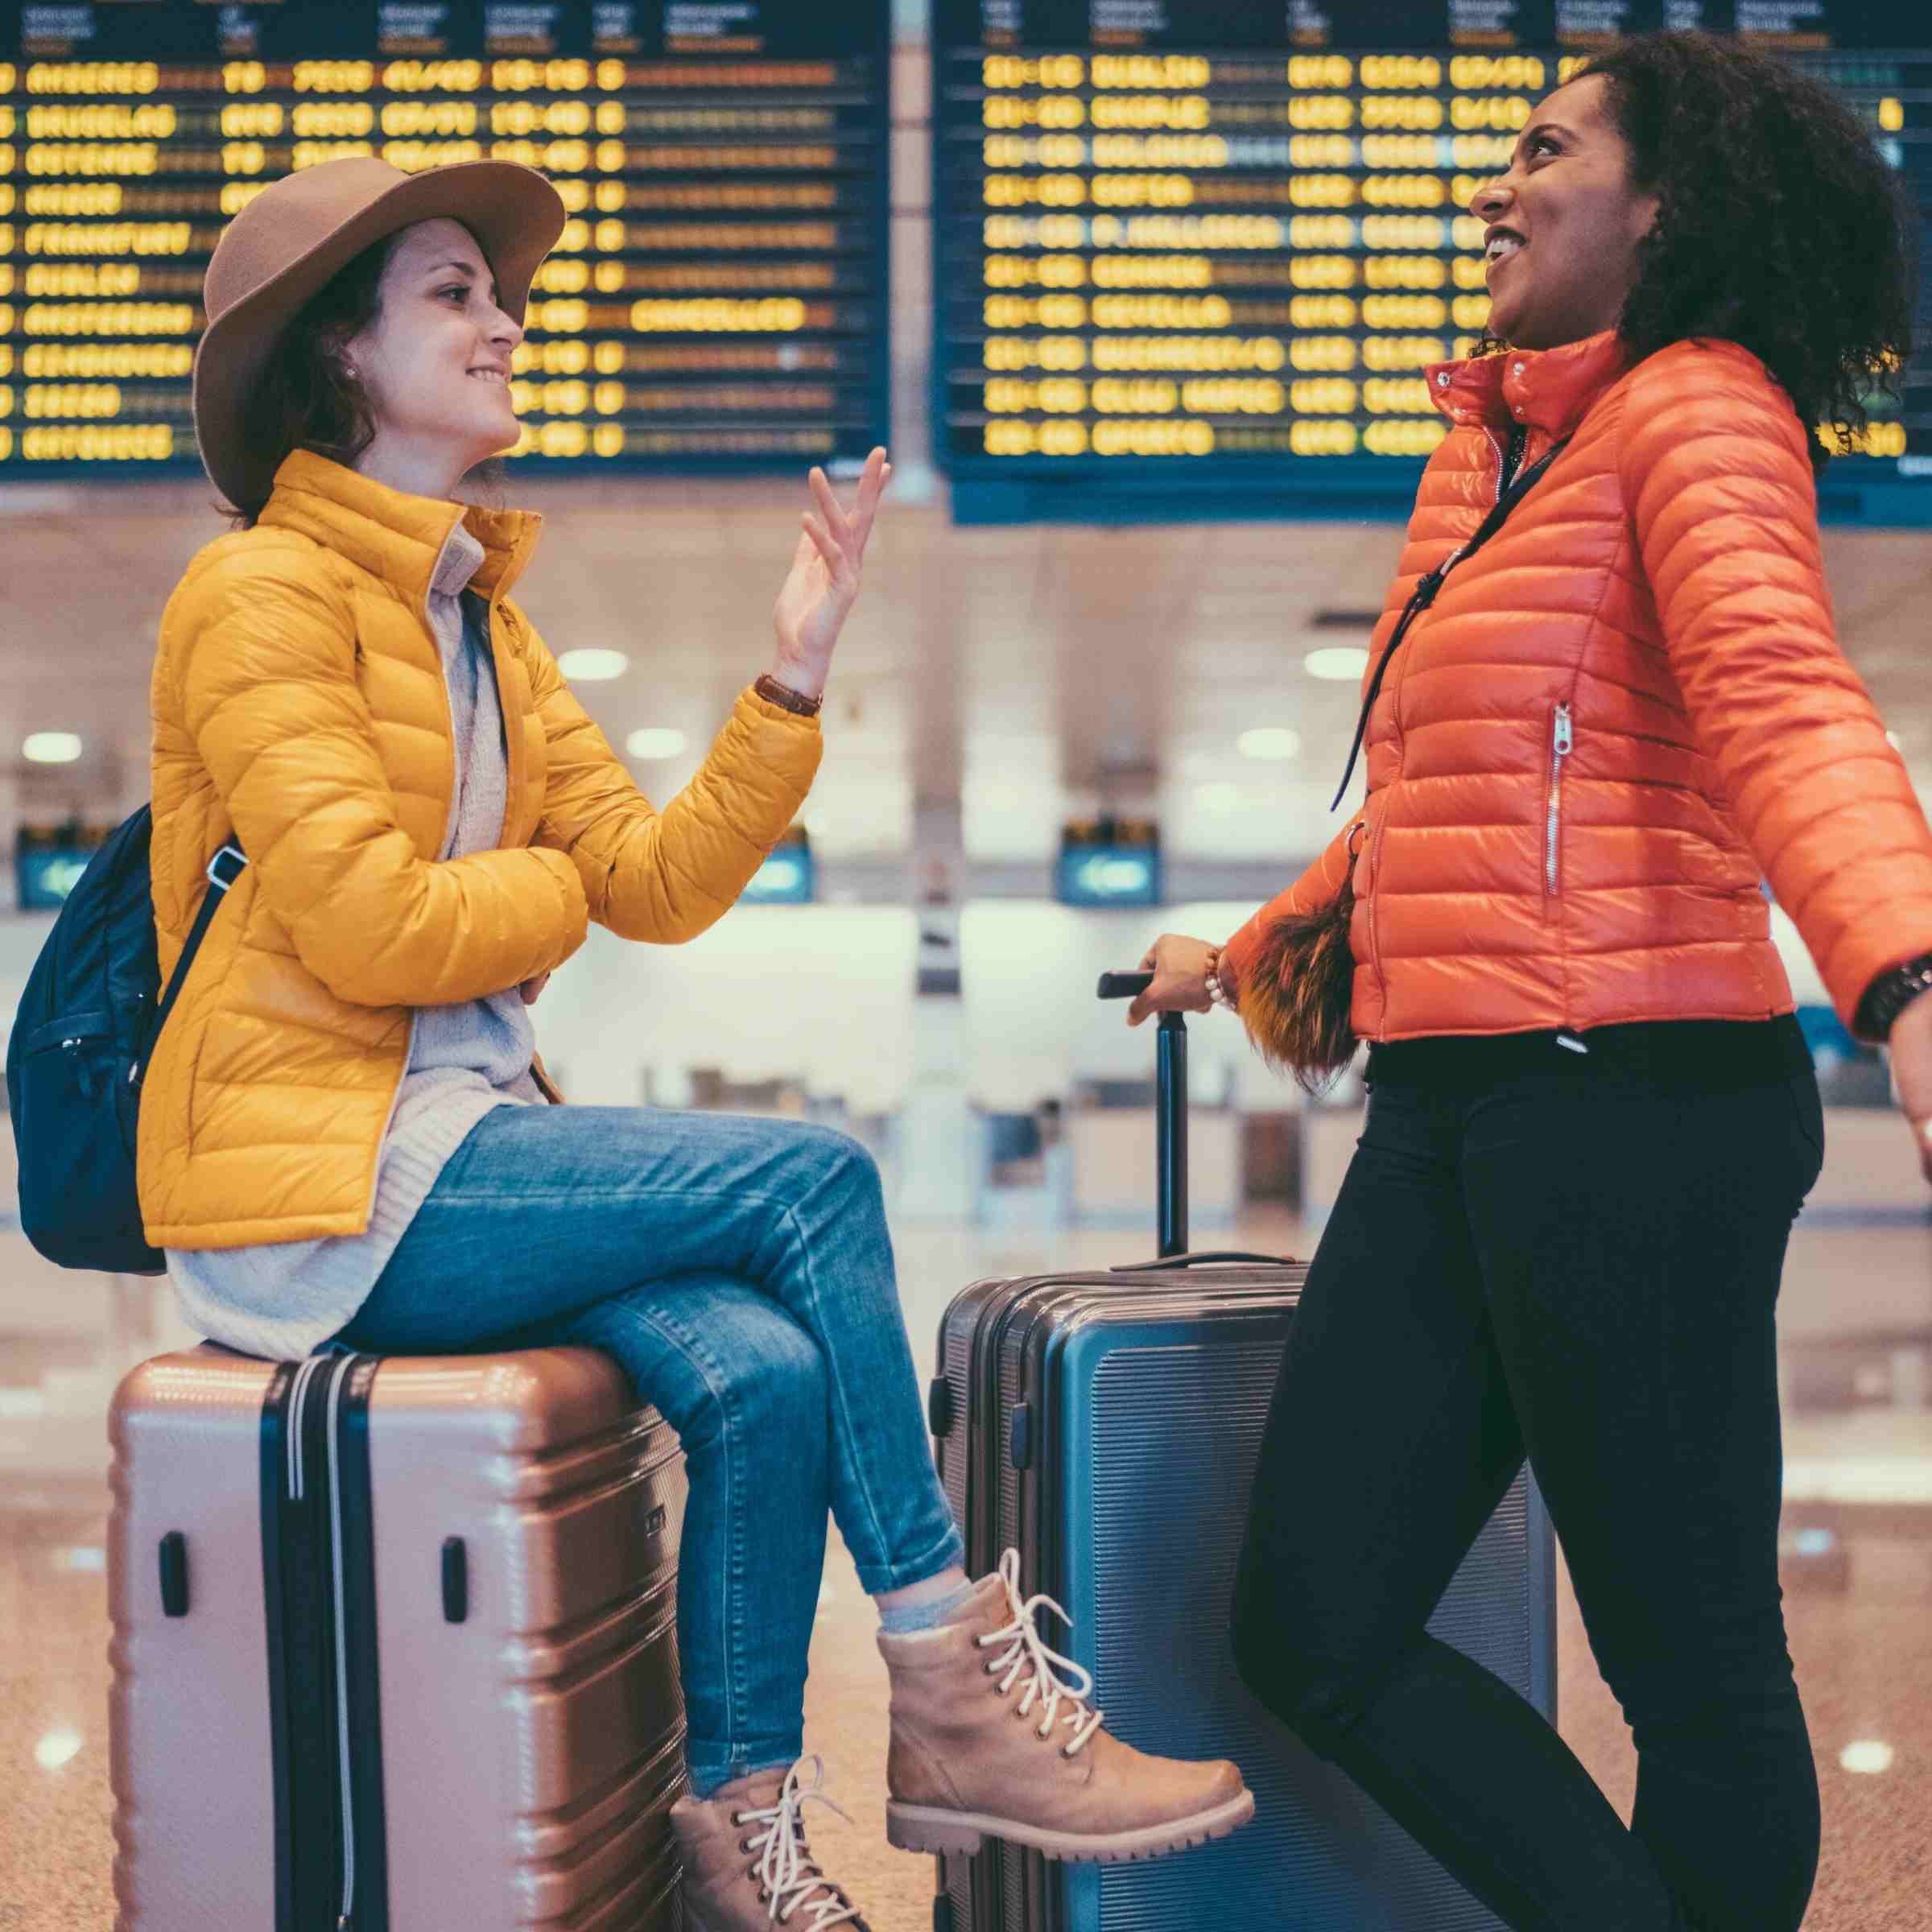 Girls At Airport